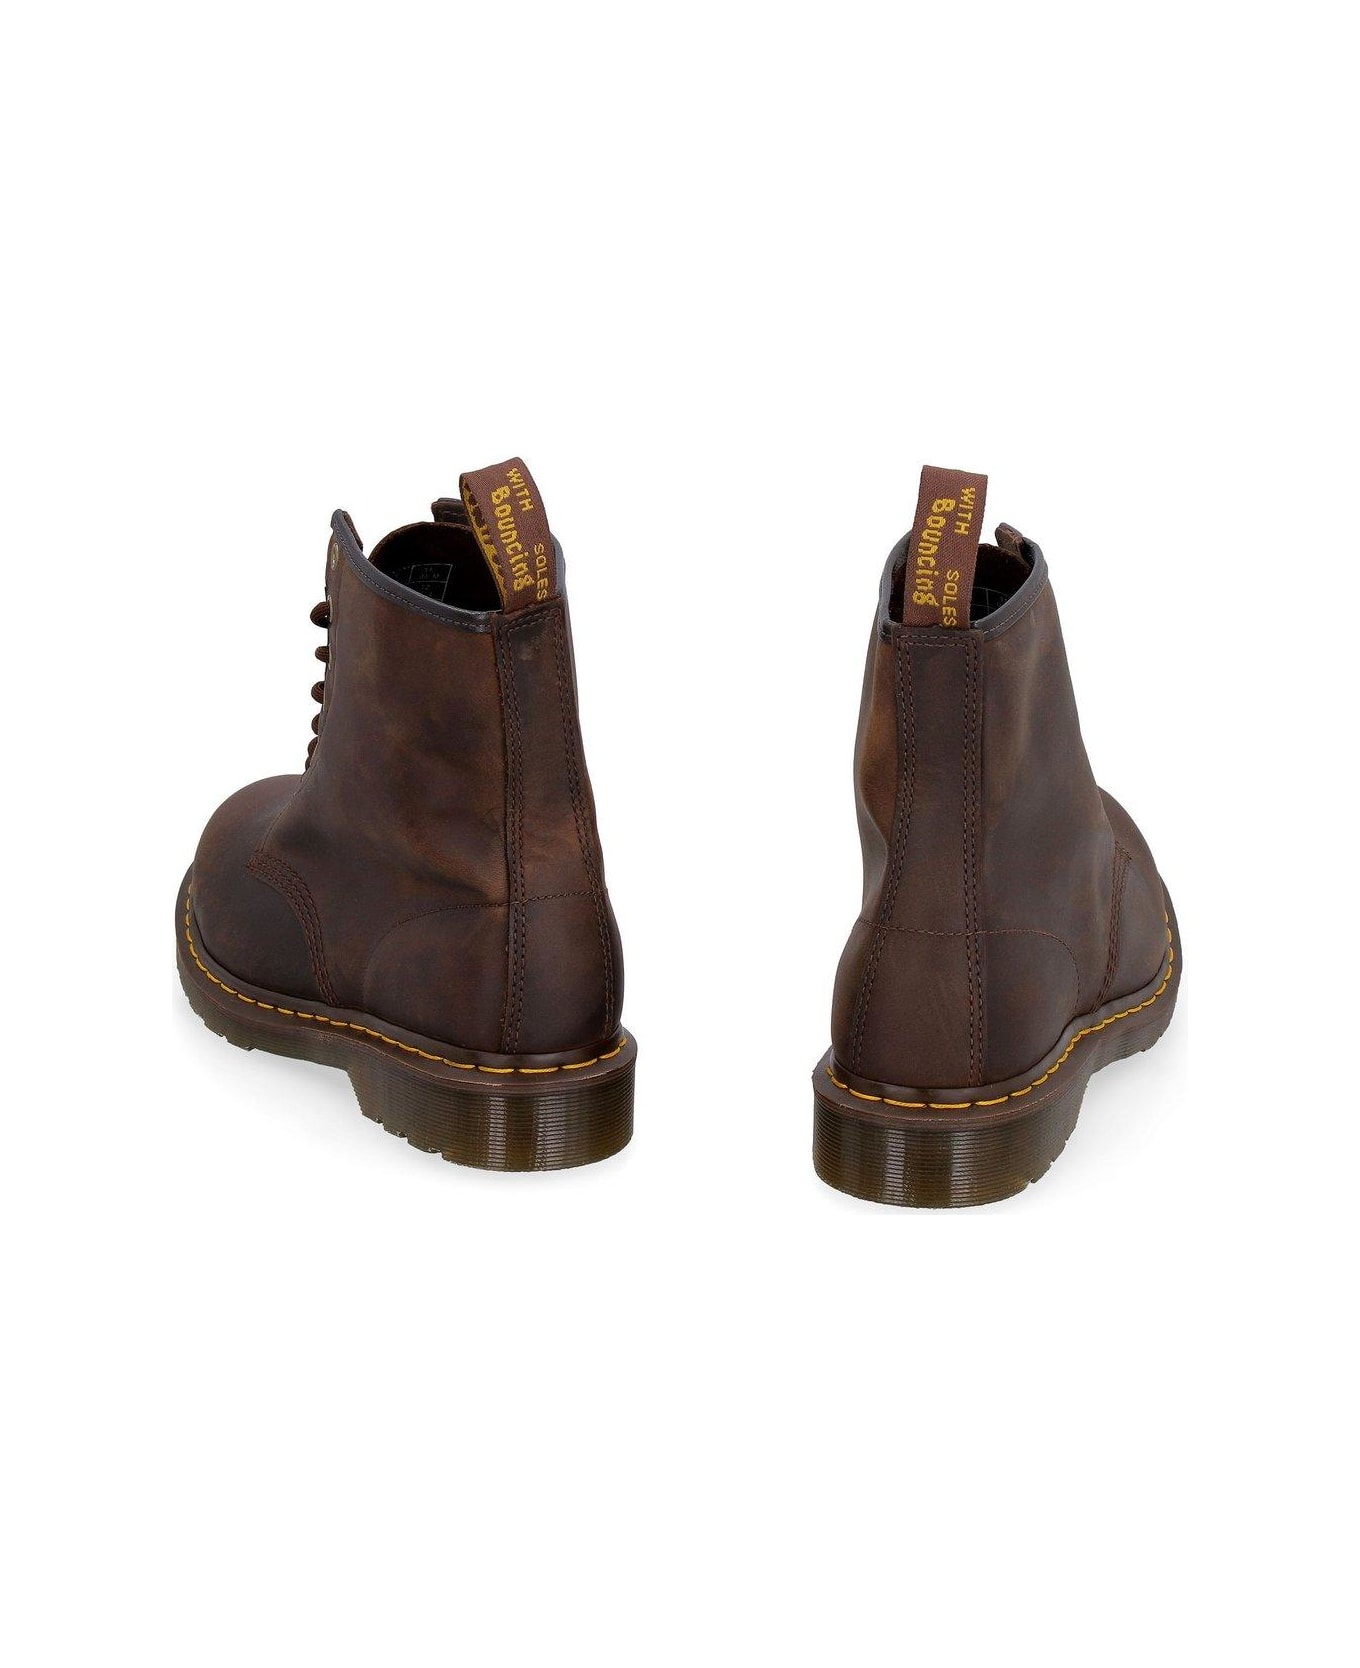 Dr. Martens 1460 Combat Boots - brown